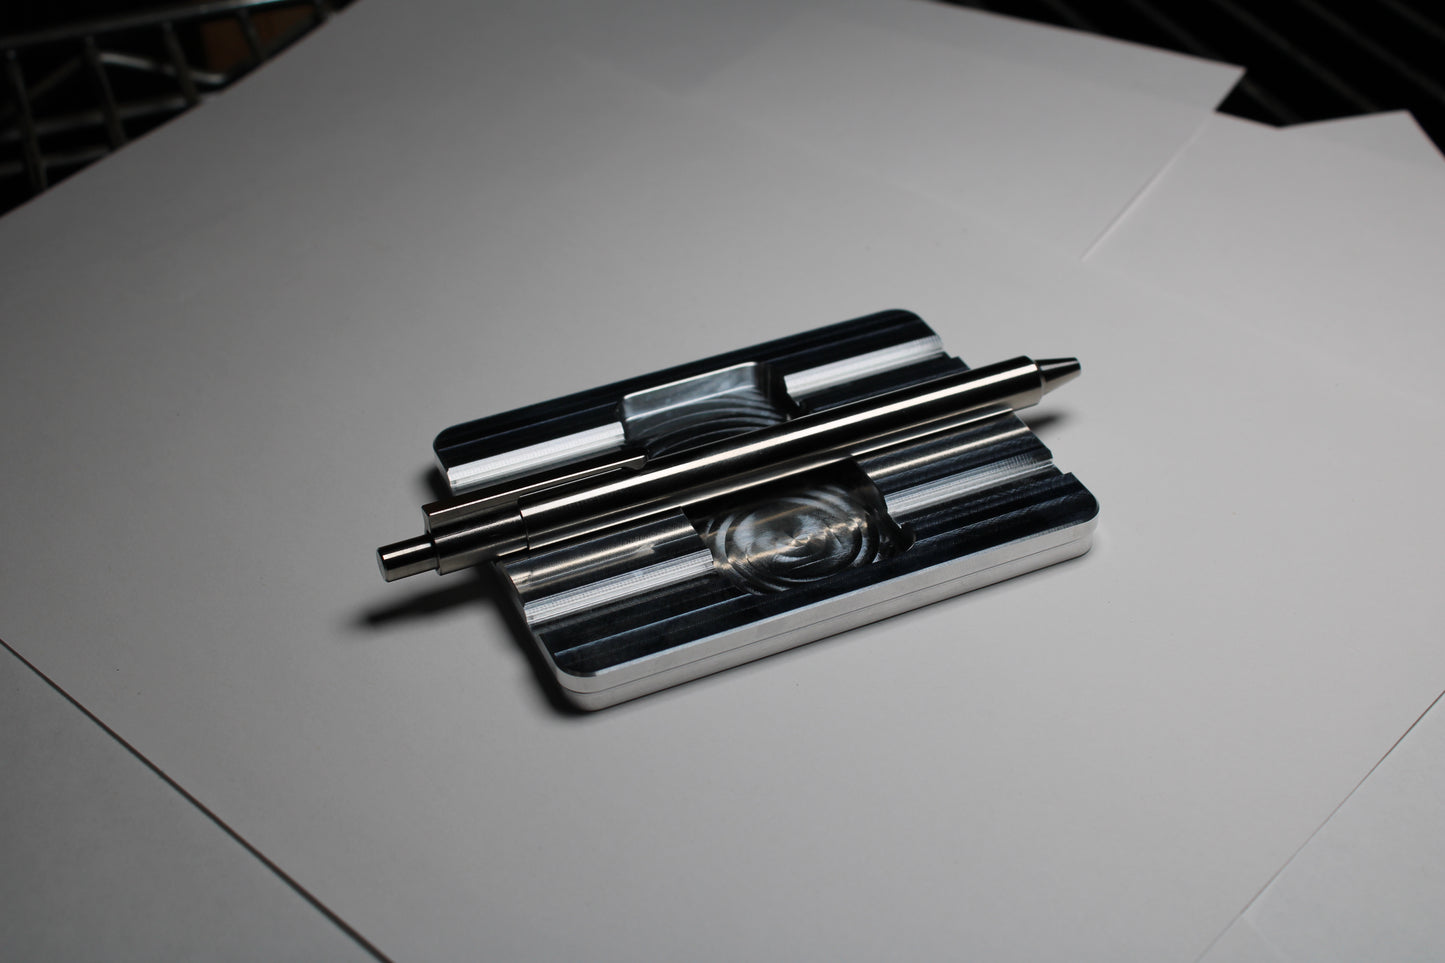 6061 Aluminum Pen Tray